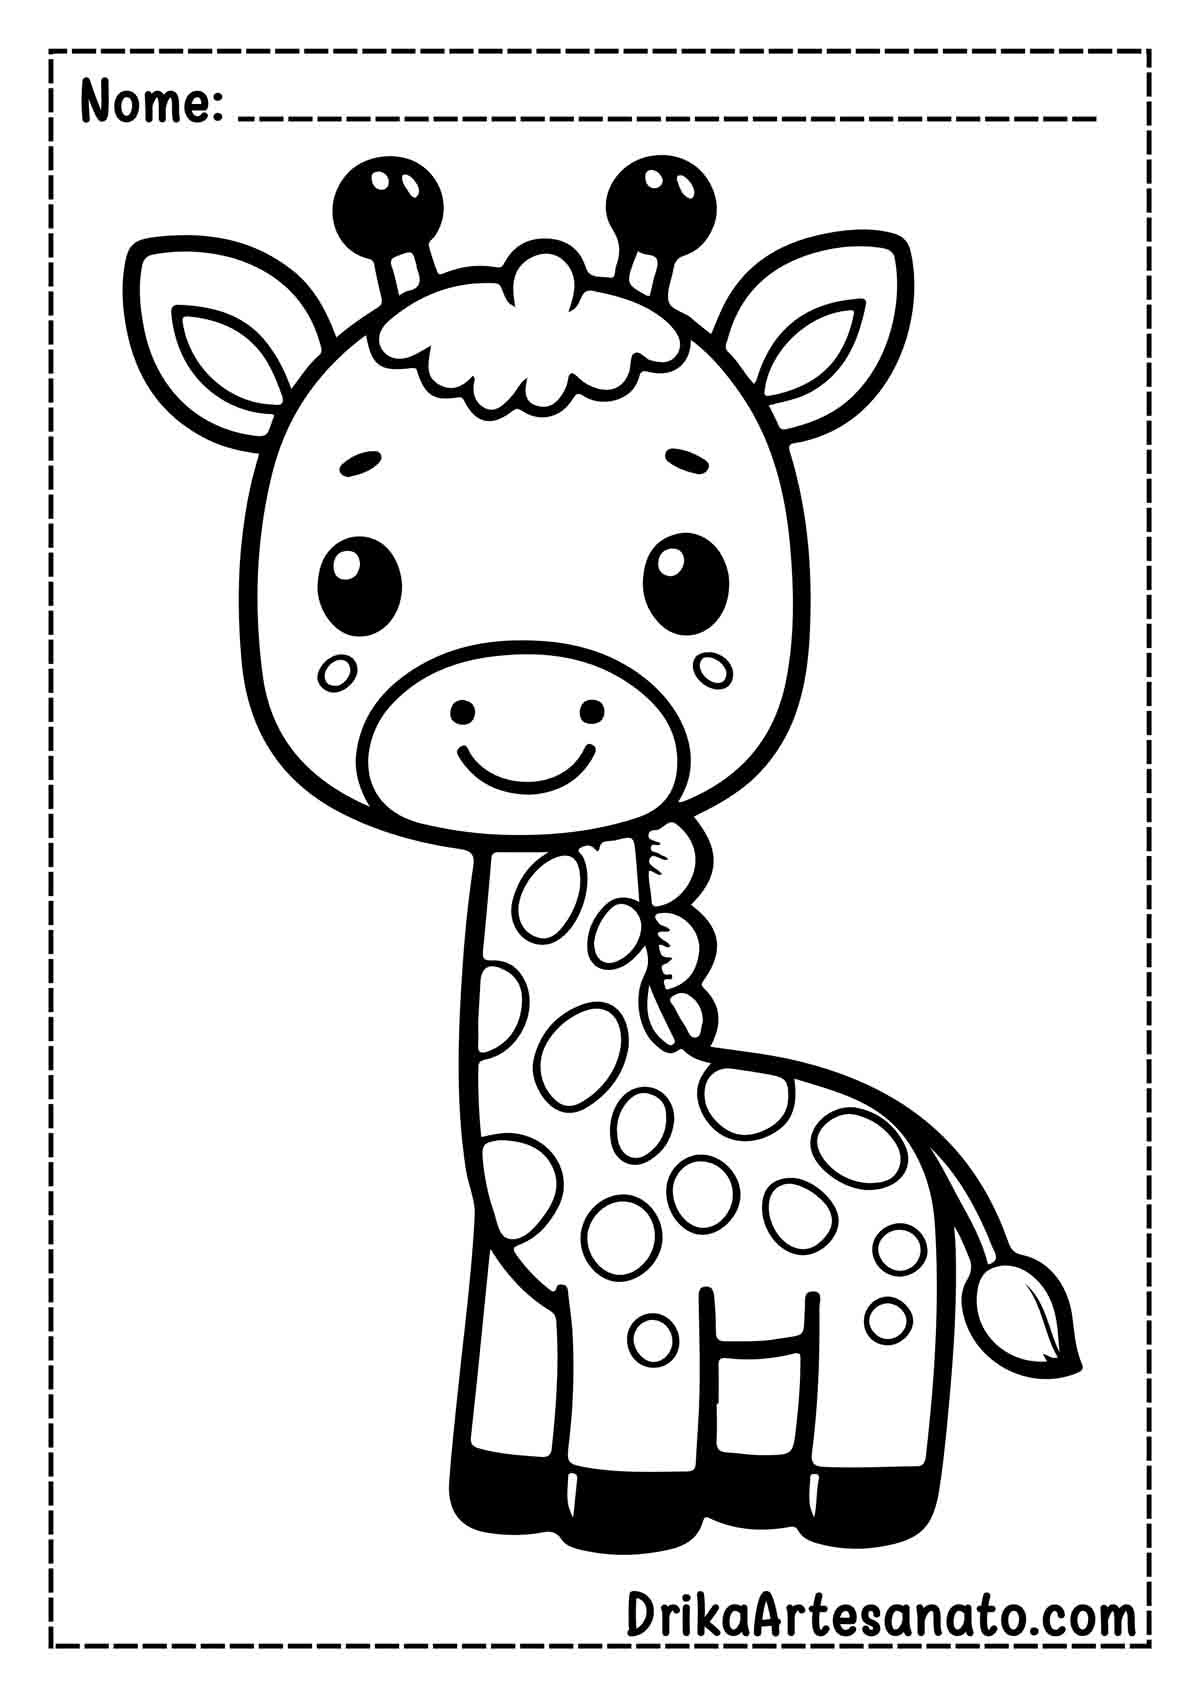 Desenho de Girafa Fácil para Imprimir e Colorir